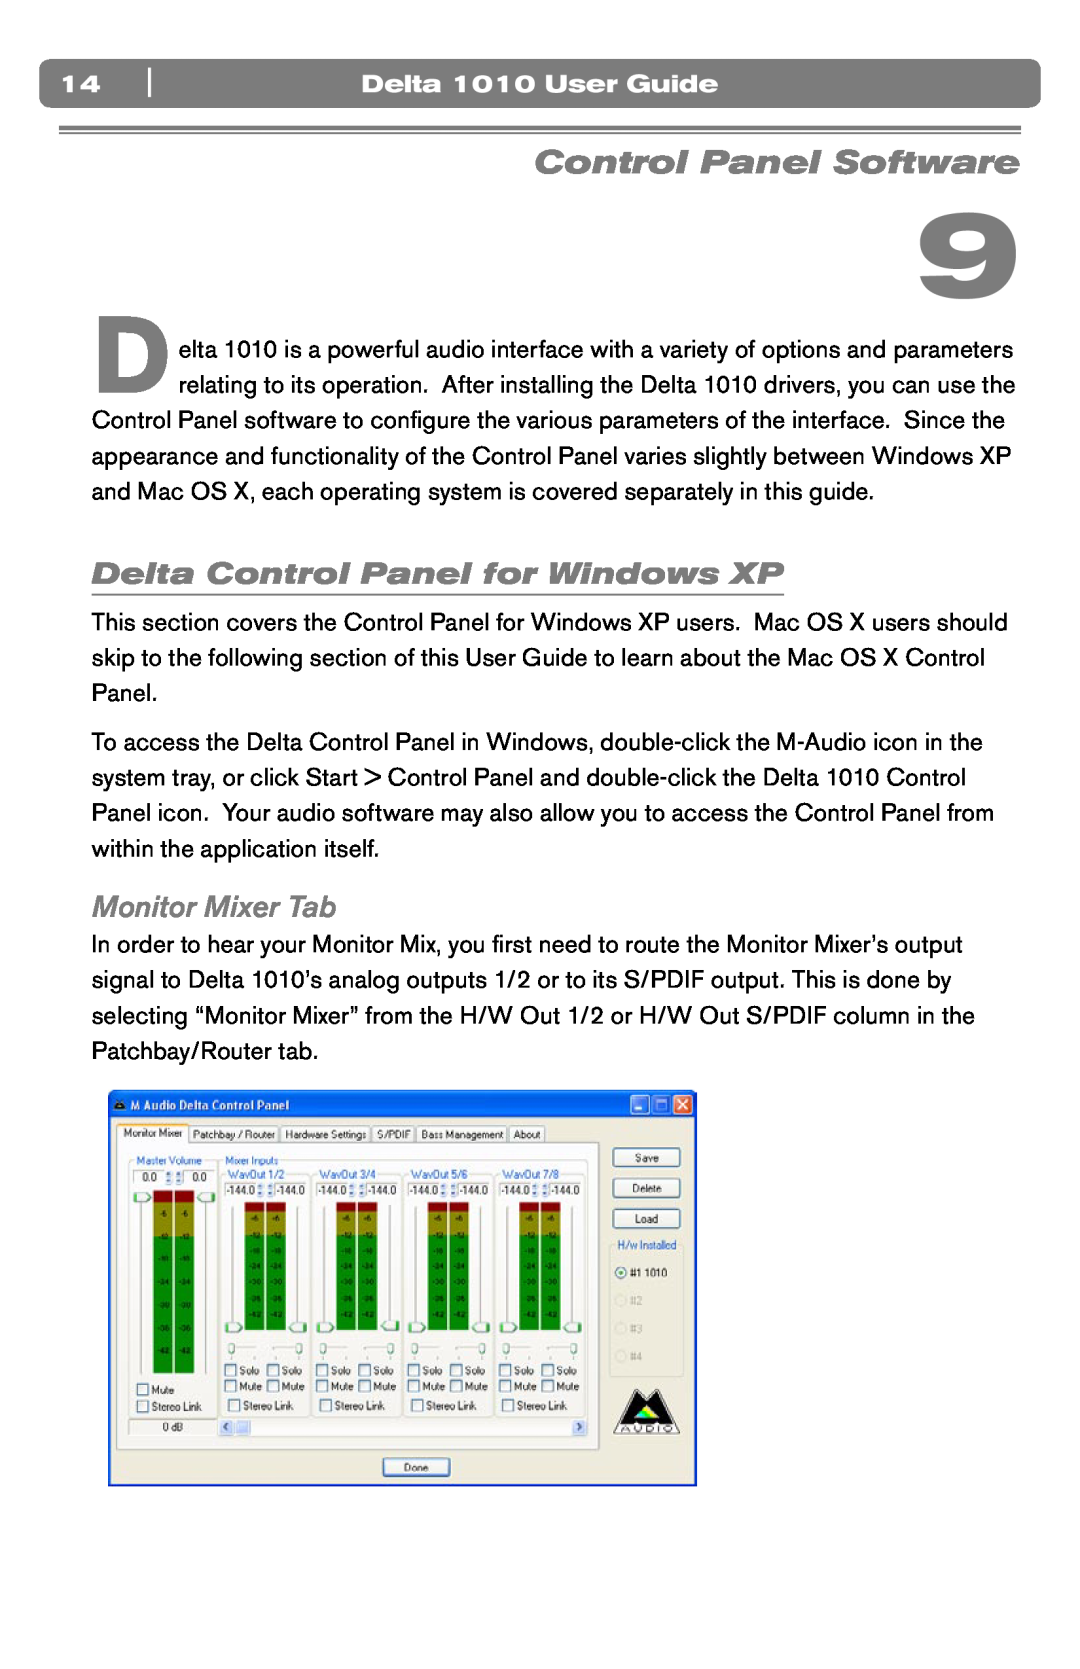 M-Audio DELTA 1010 Control Panel Software, Delta Control Panel for Windows XP, Monitor Mixer Tab, Delta 1010 User Guide 